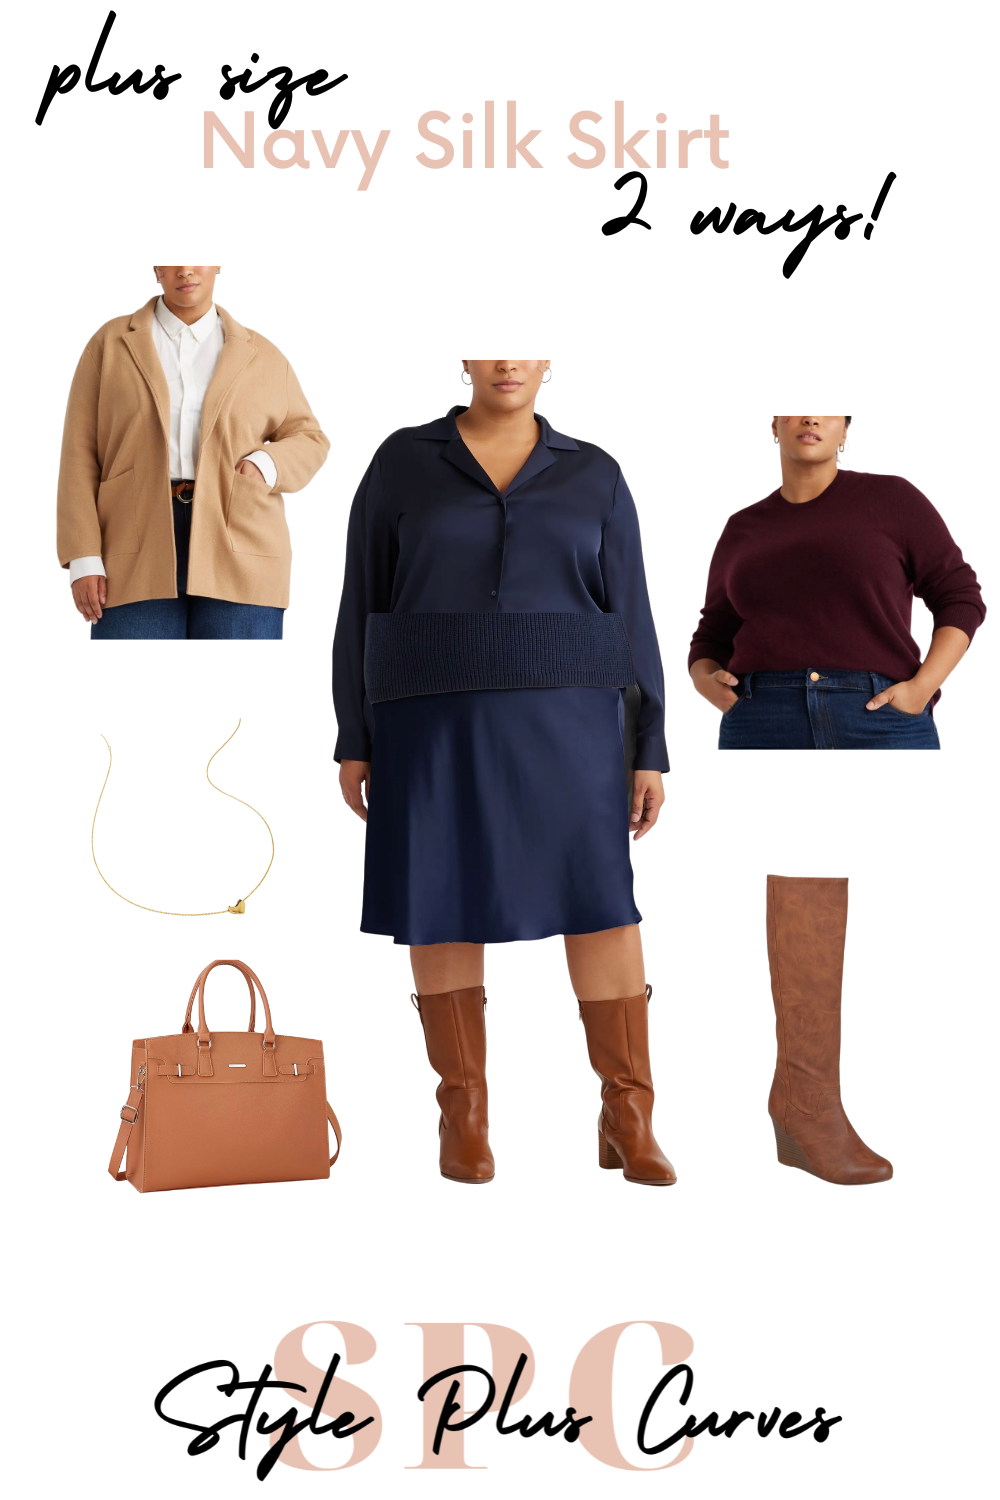 Plus Size Navy Silk Skirt – Styled 2 Ways!